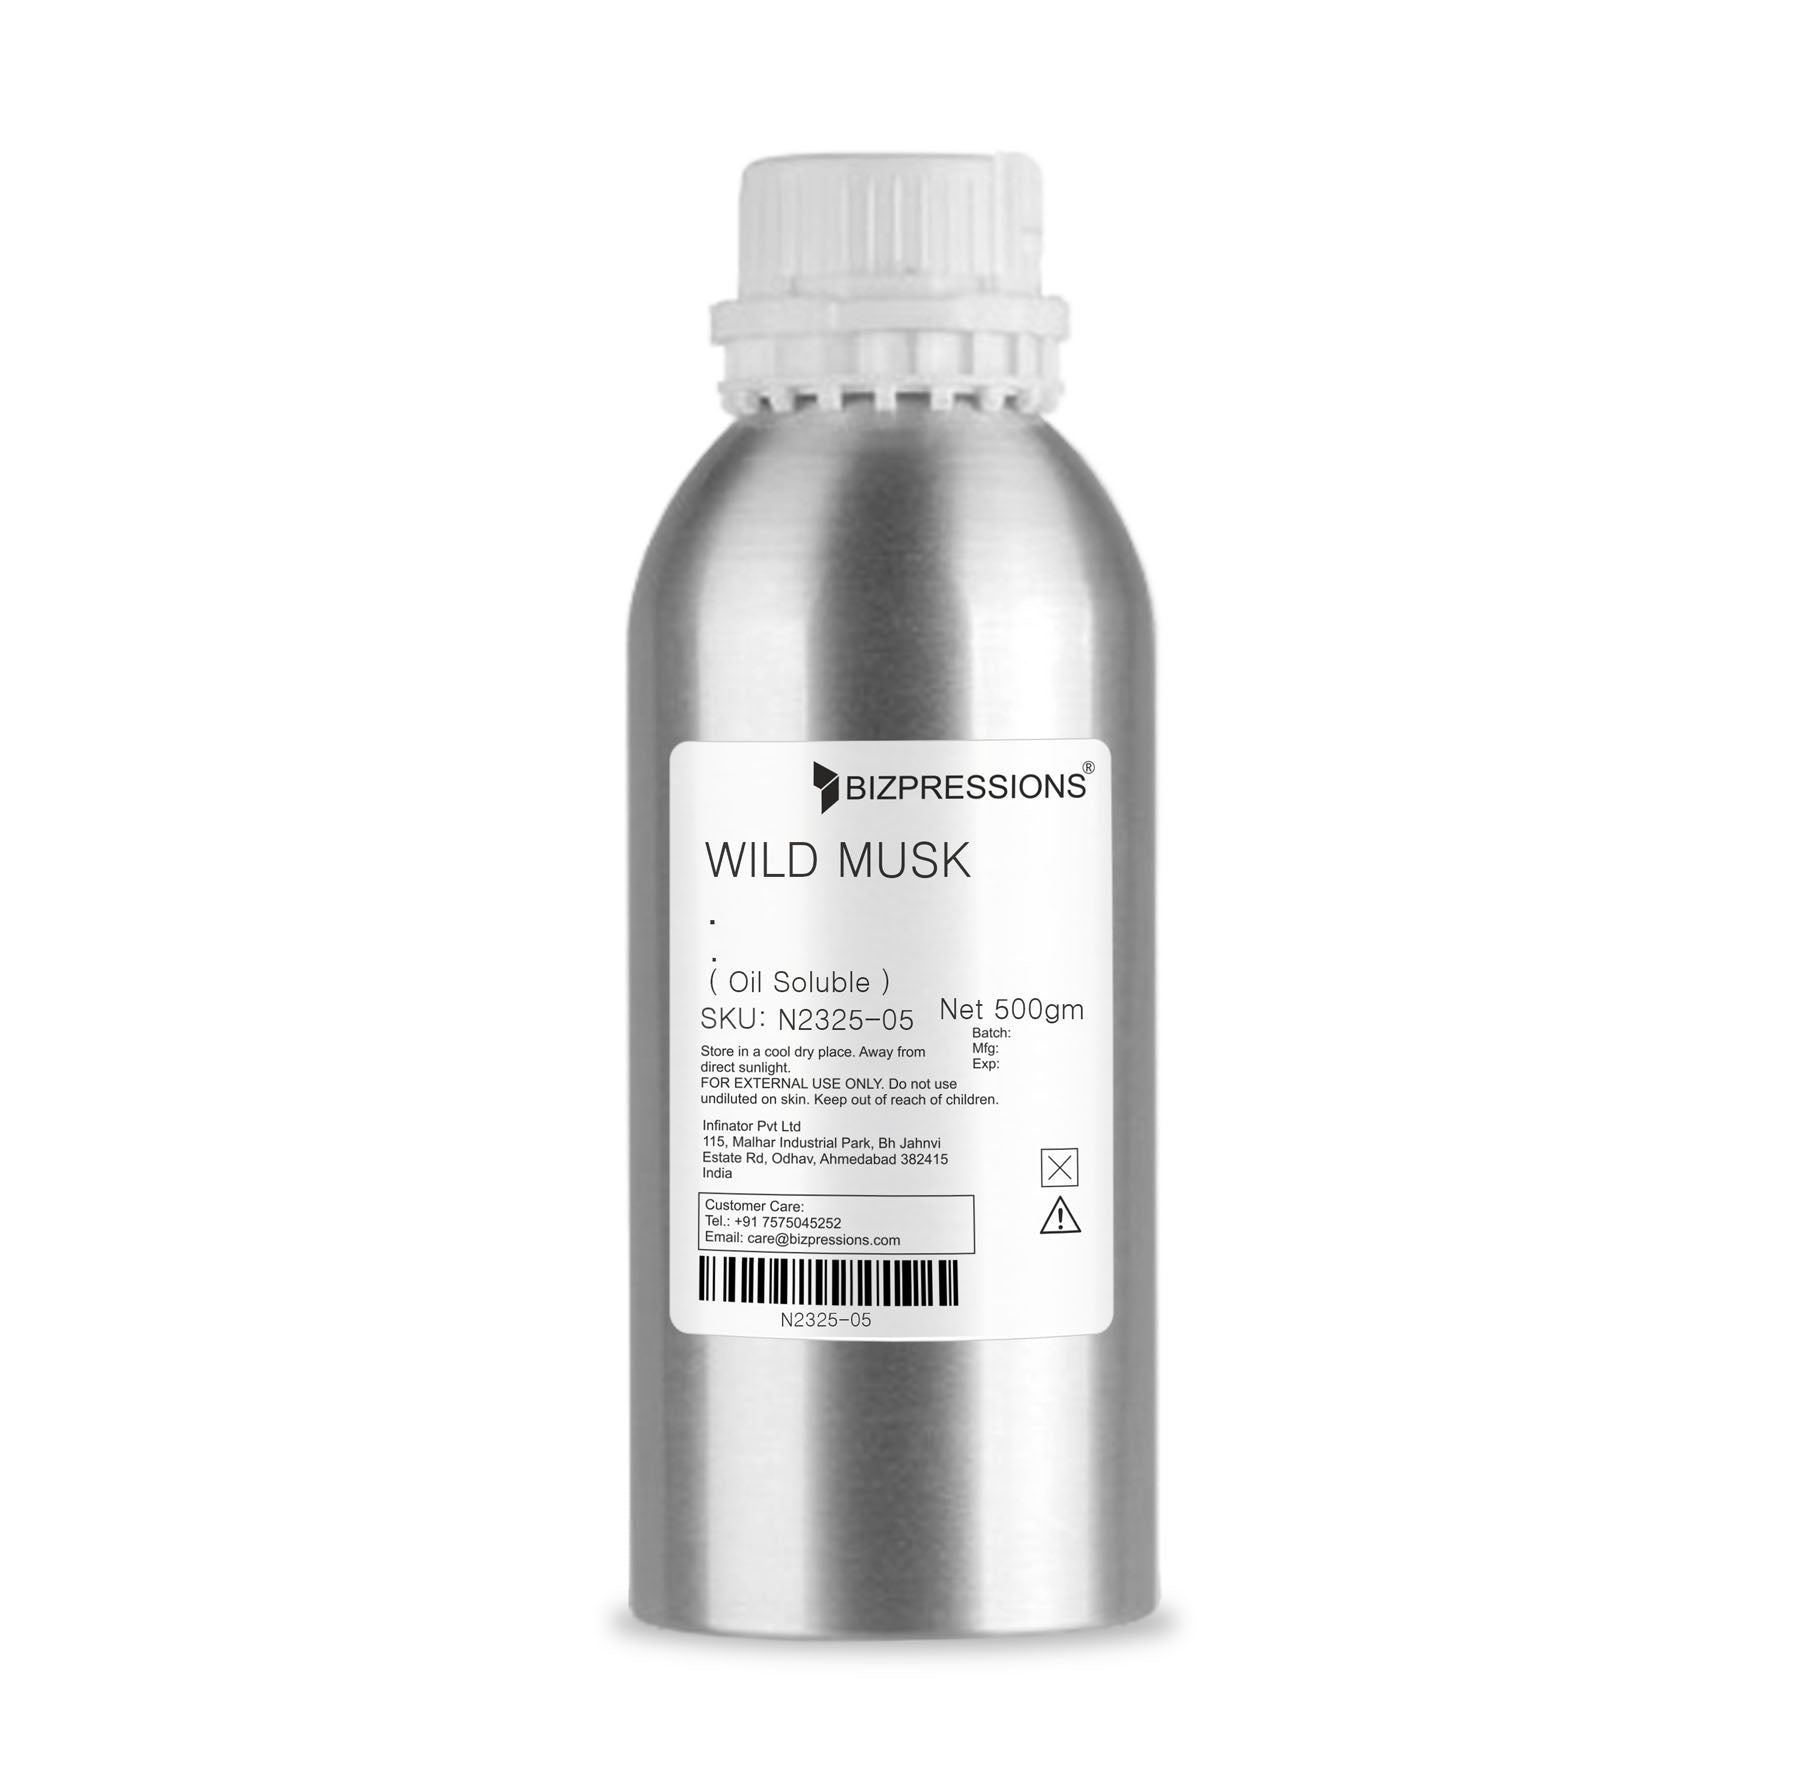 WILD MUSK - Fragrance ( Oil Soluble ) - 500 gm